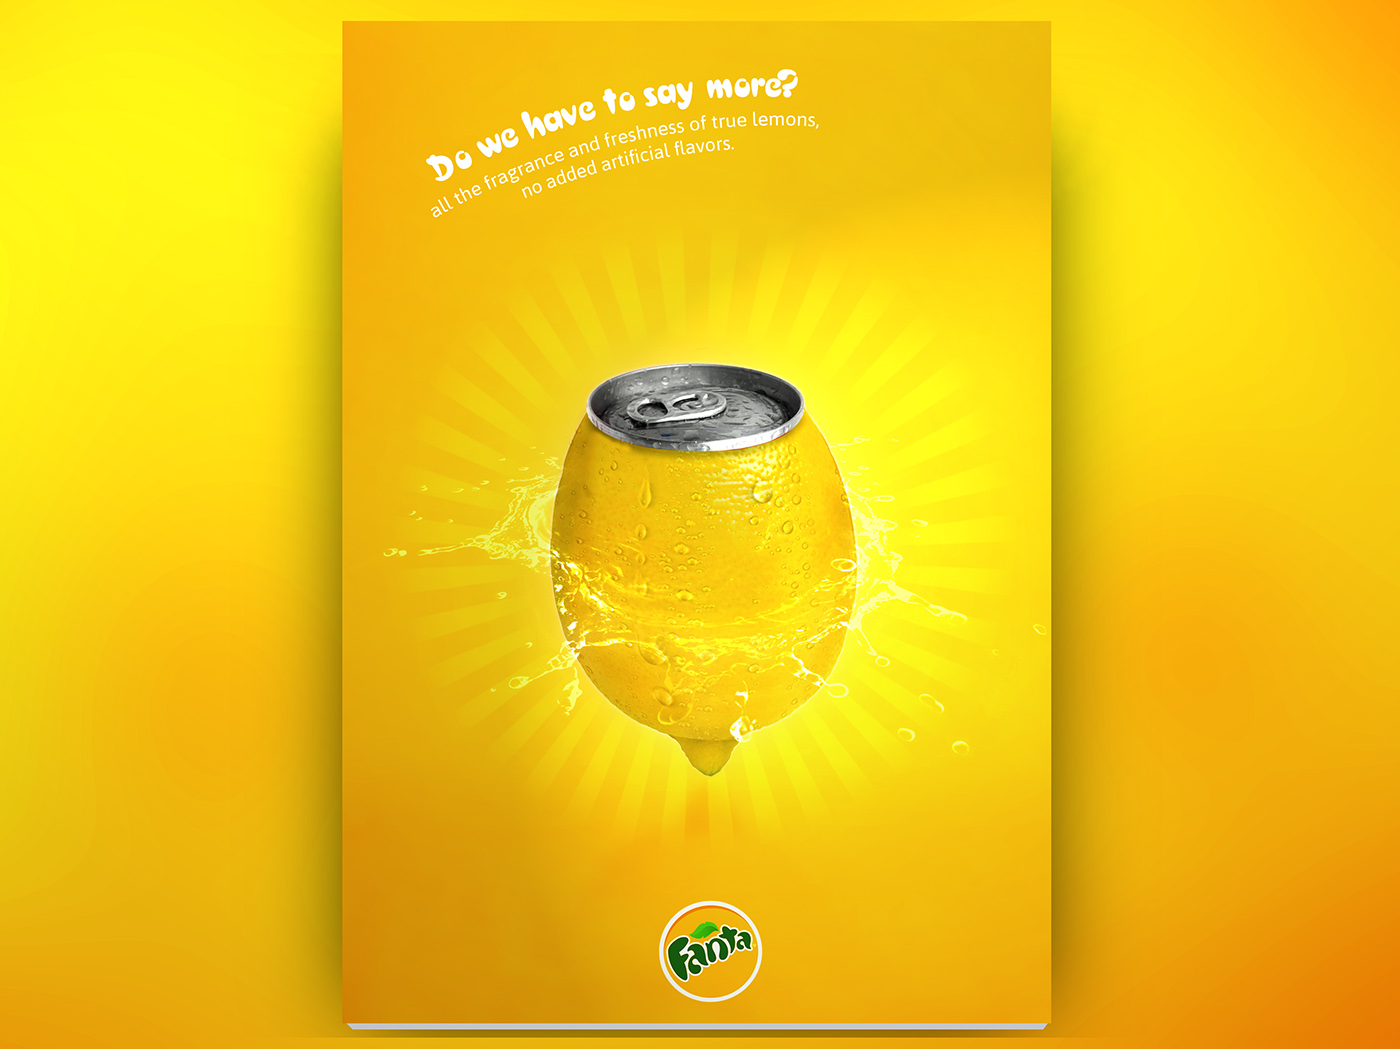 orange can photomanipulation lemonade lemon can orangeade fanta print ads creative advertising soft drink retouch